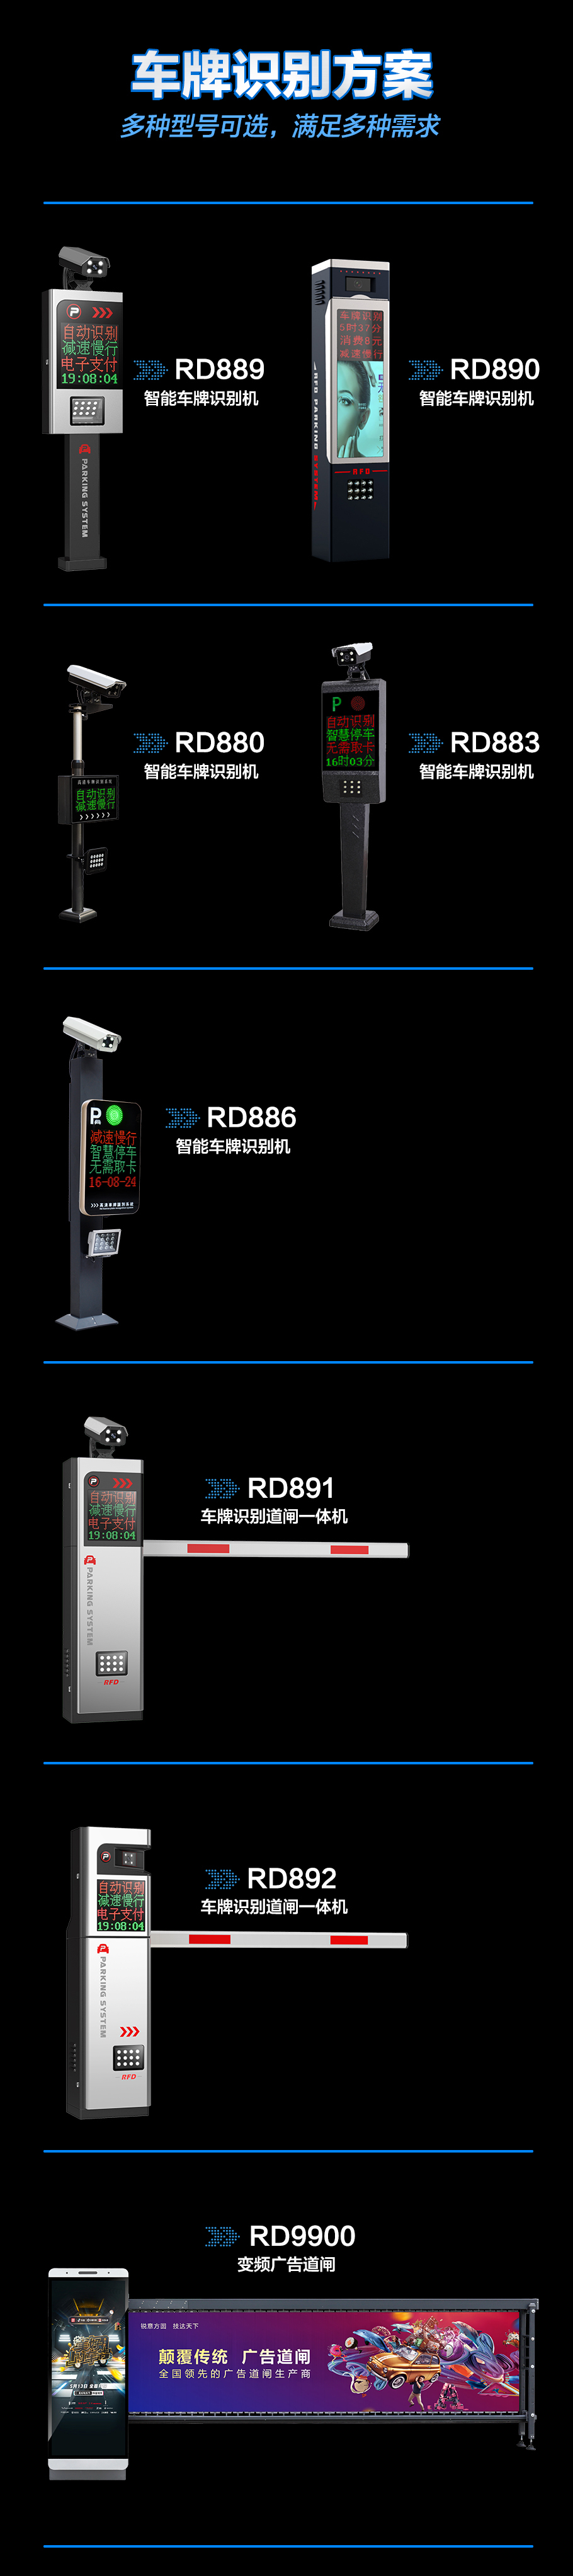 RD883车辆识别系统